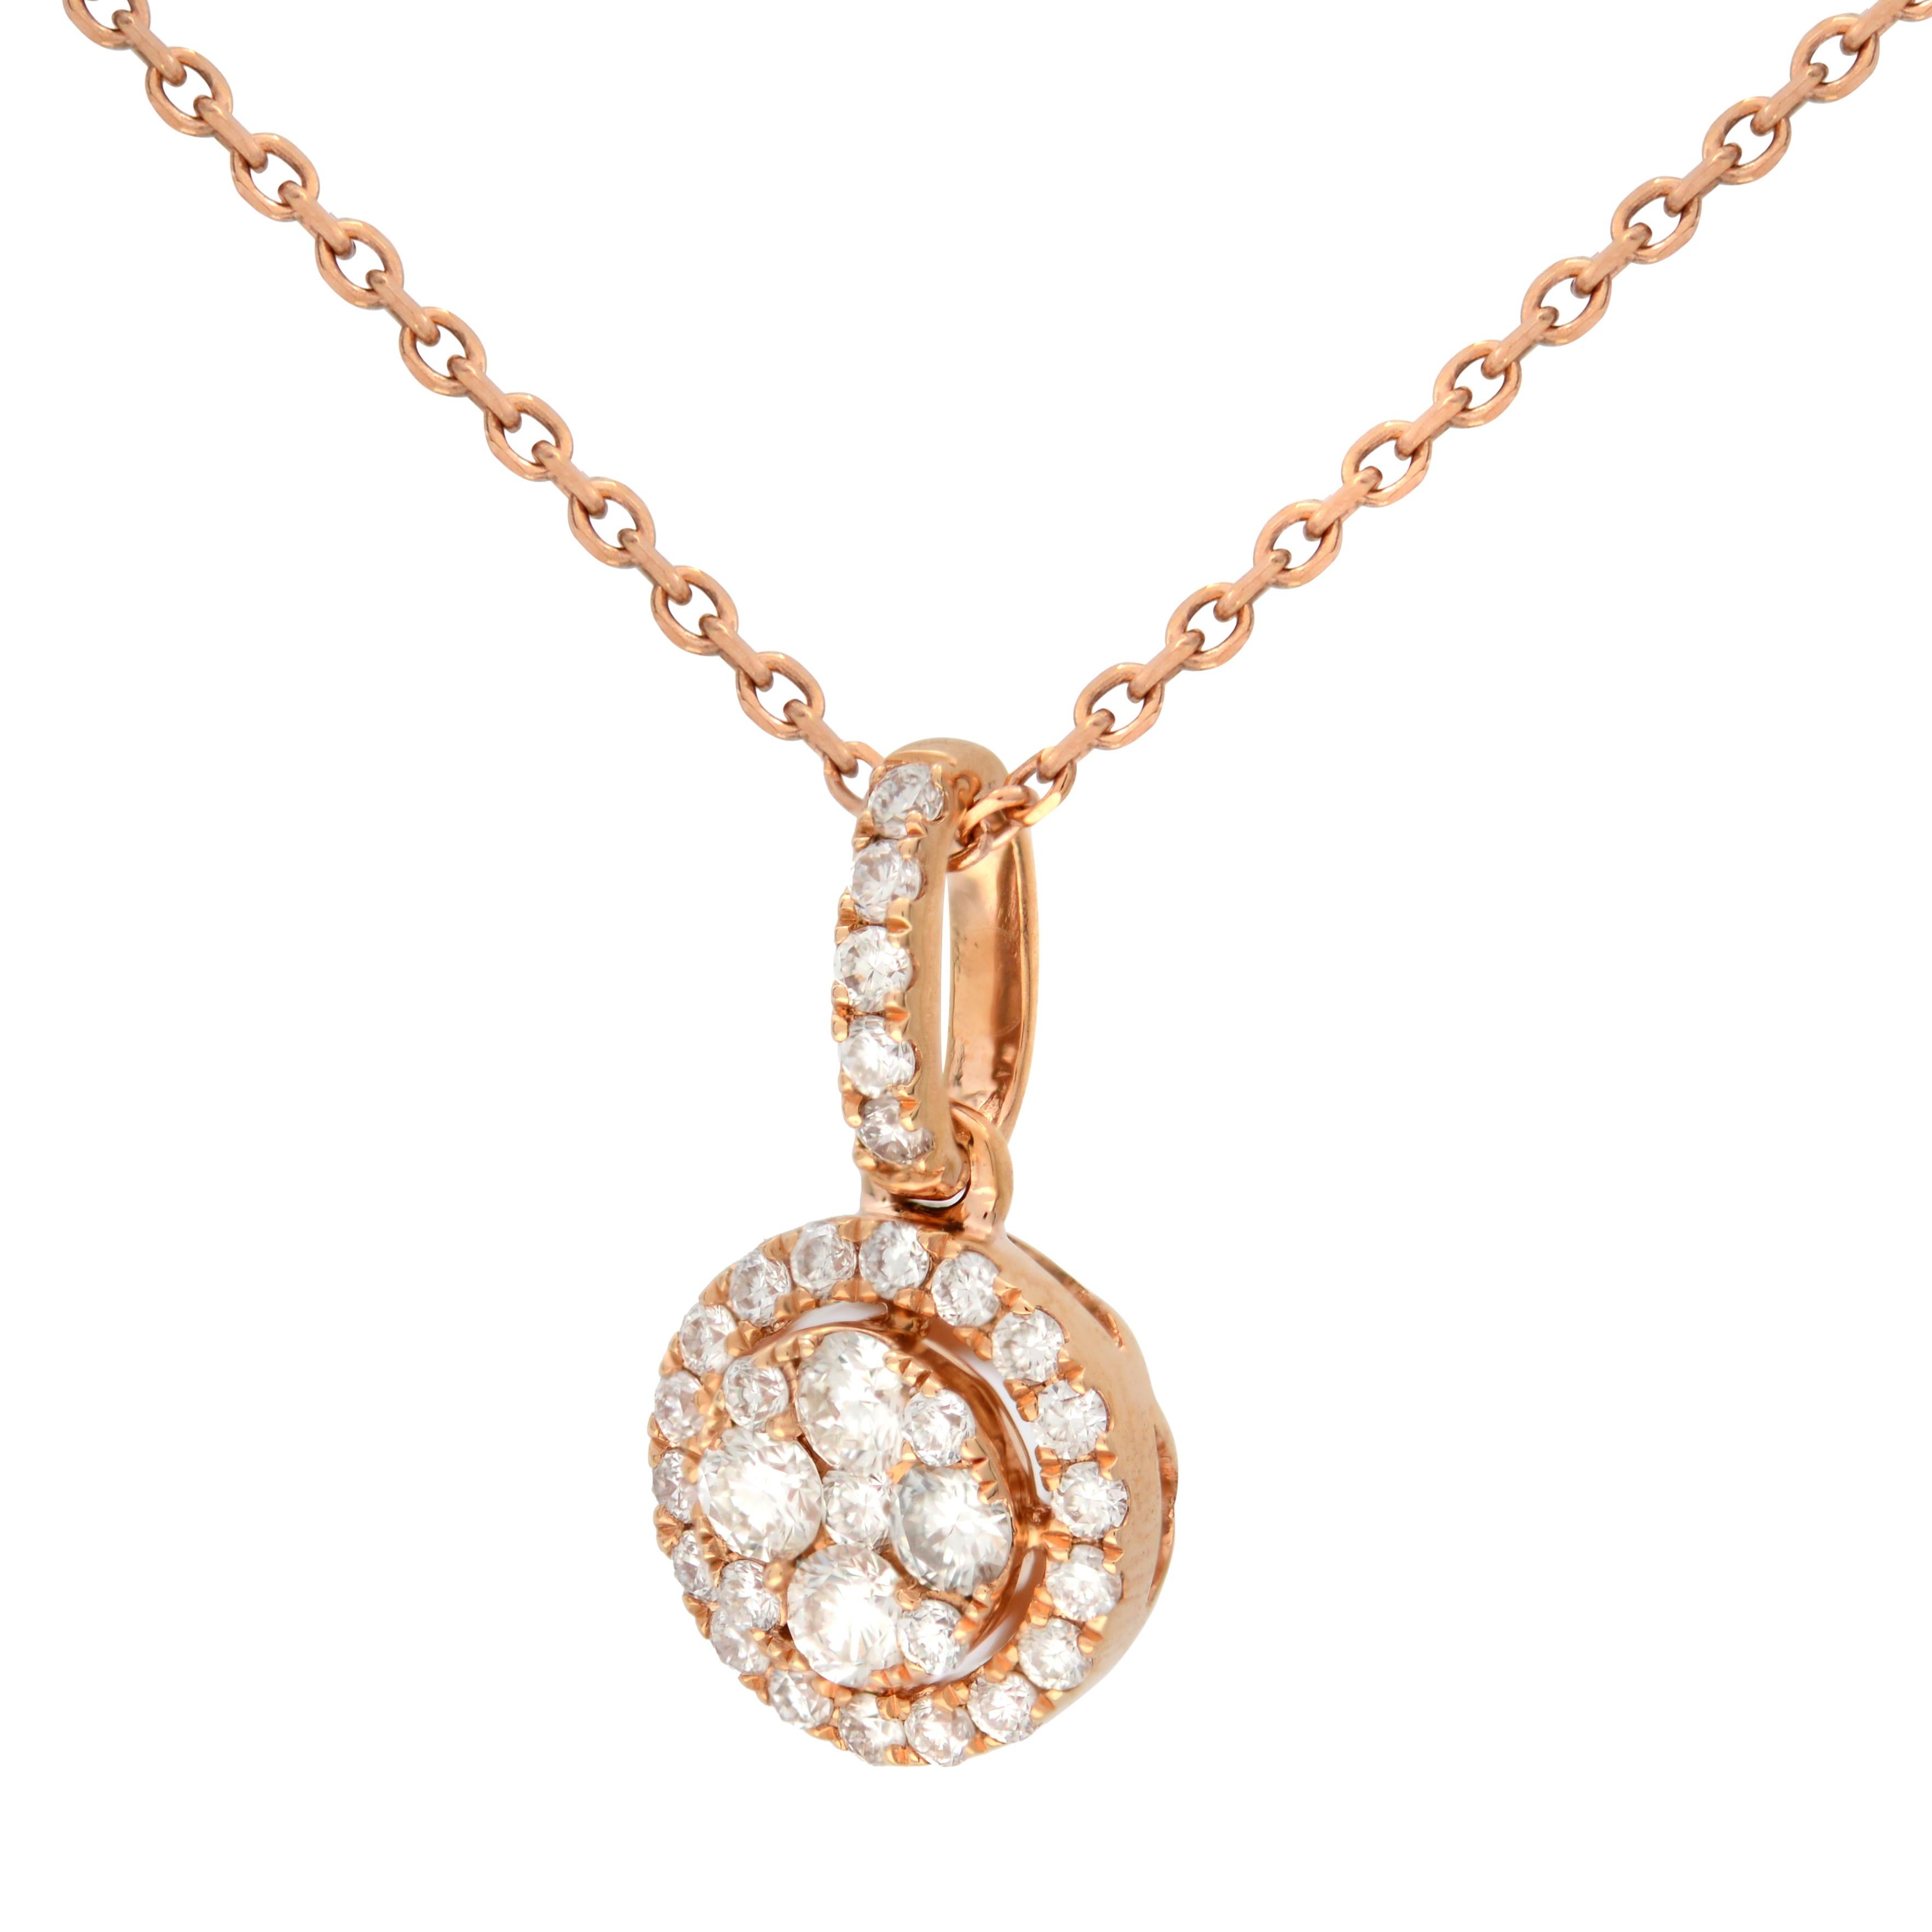 Modern Rachel Koen Halo Diamond Pendant 18k Rose Gold 0.39cttw For Sale